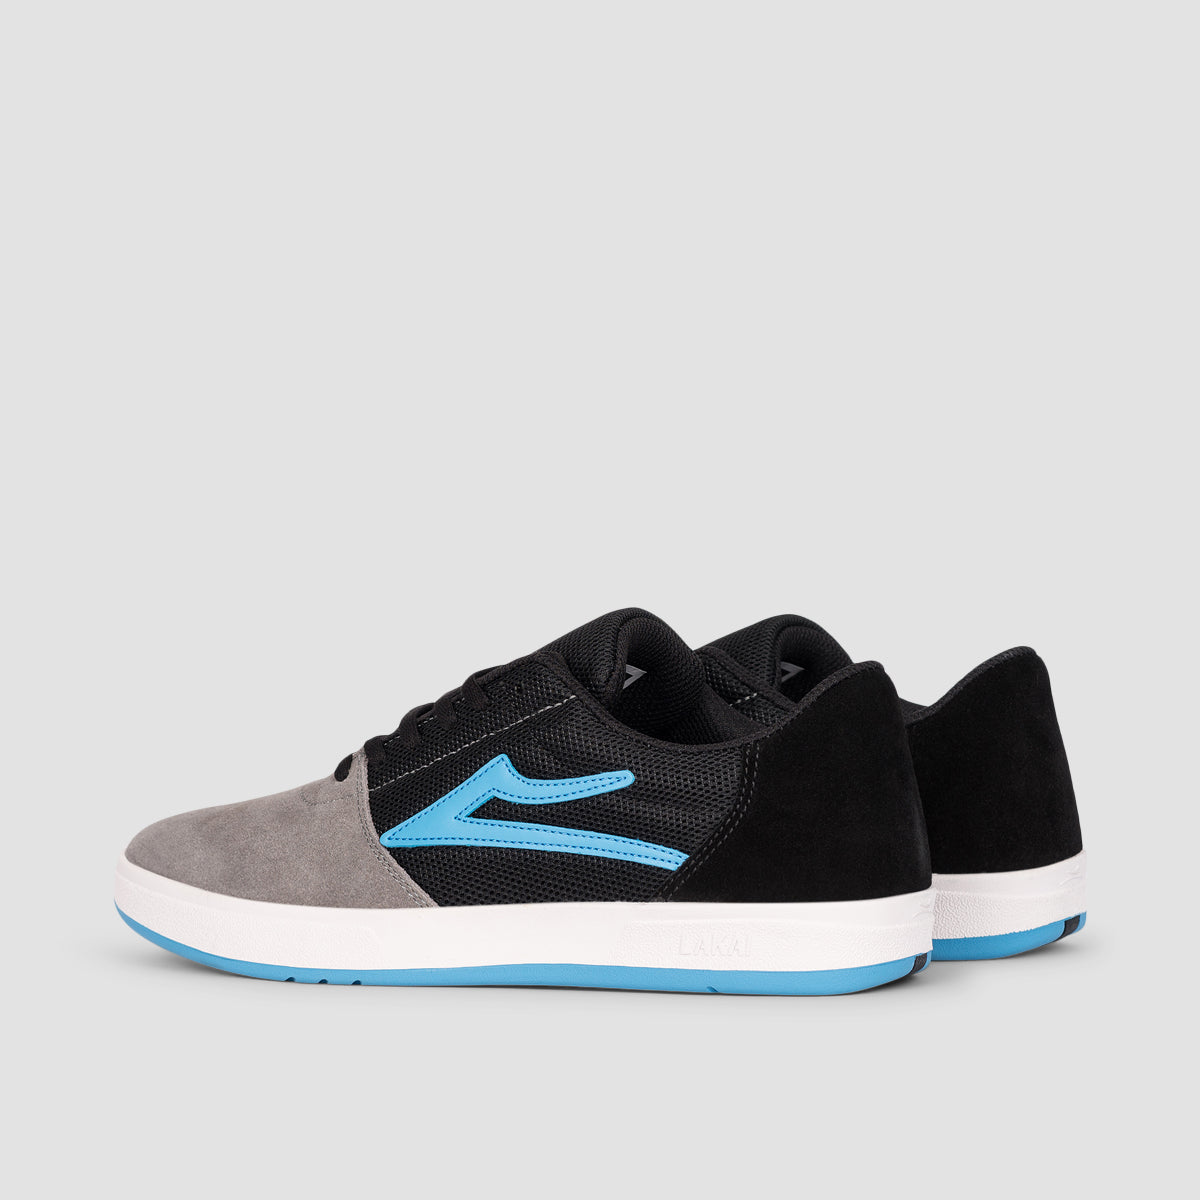 Lakai Brighton Shoes - Grey/Light Blue Suede